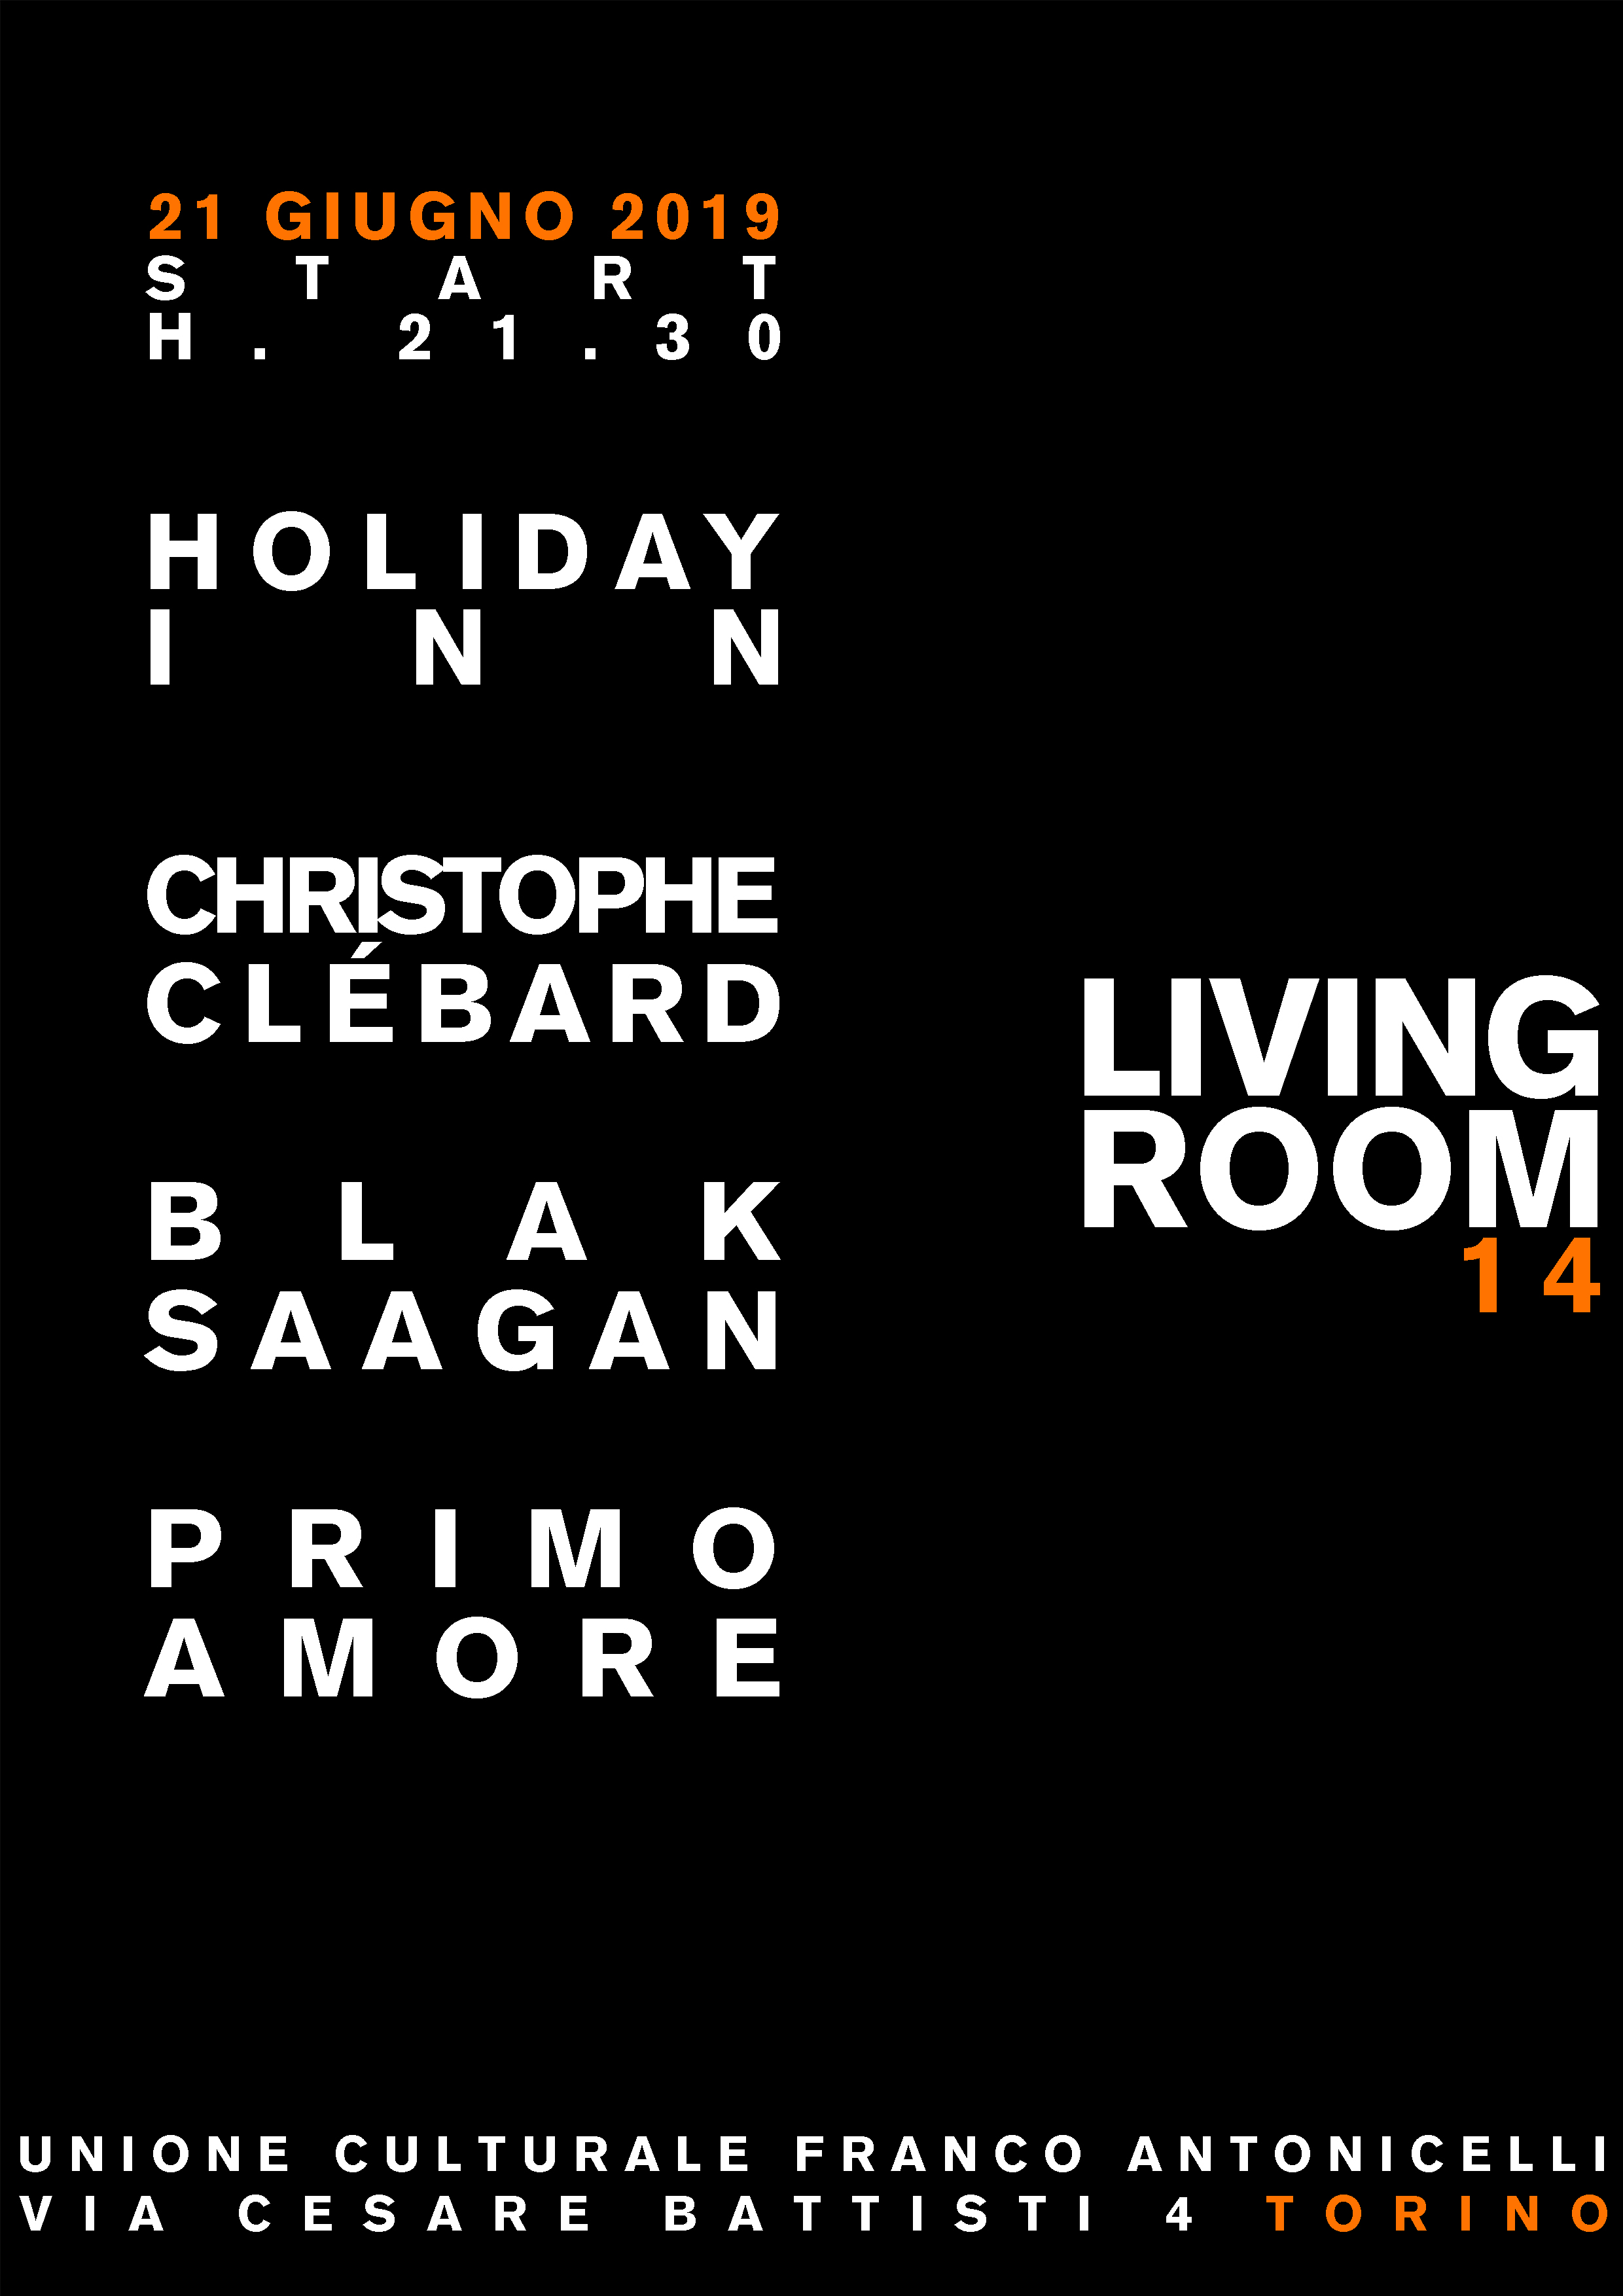 Living Room 14